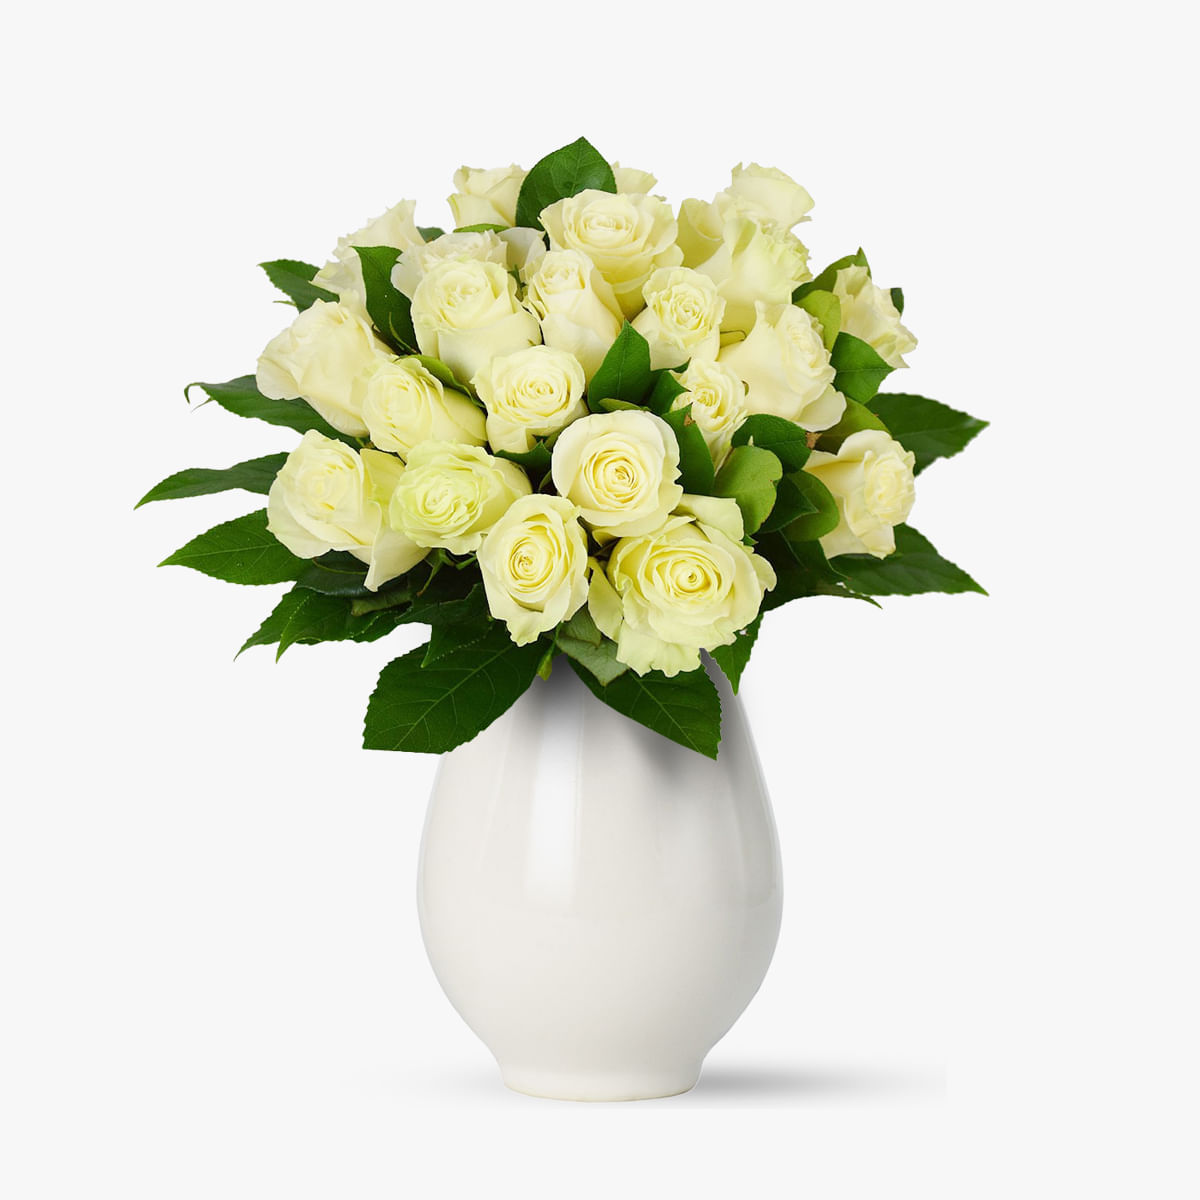 Buchet de 17 trandafiri albi – Standard albi